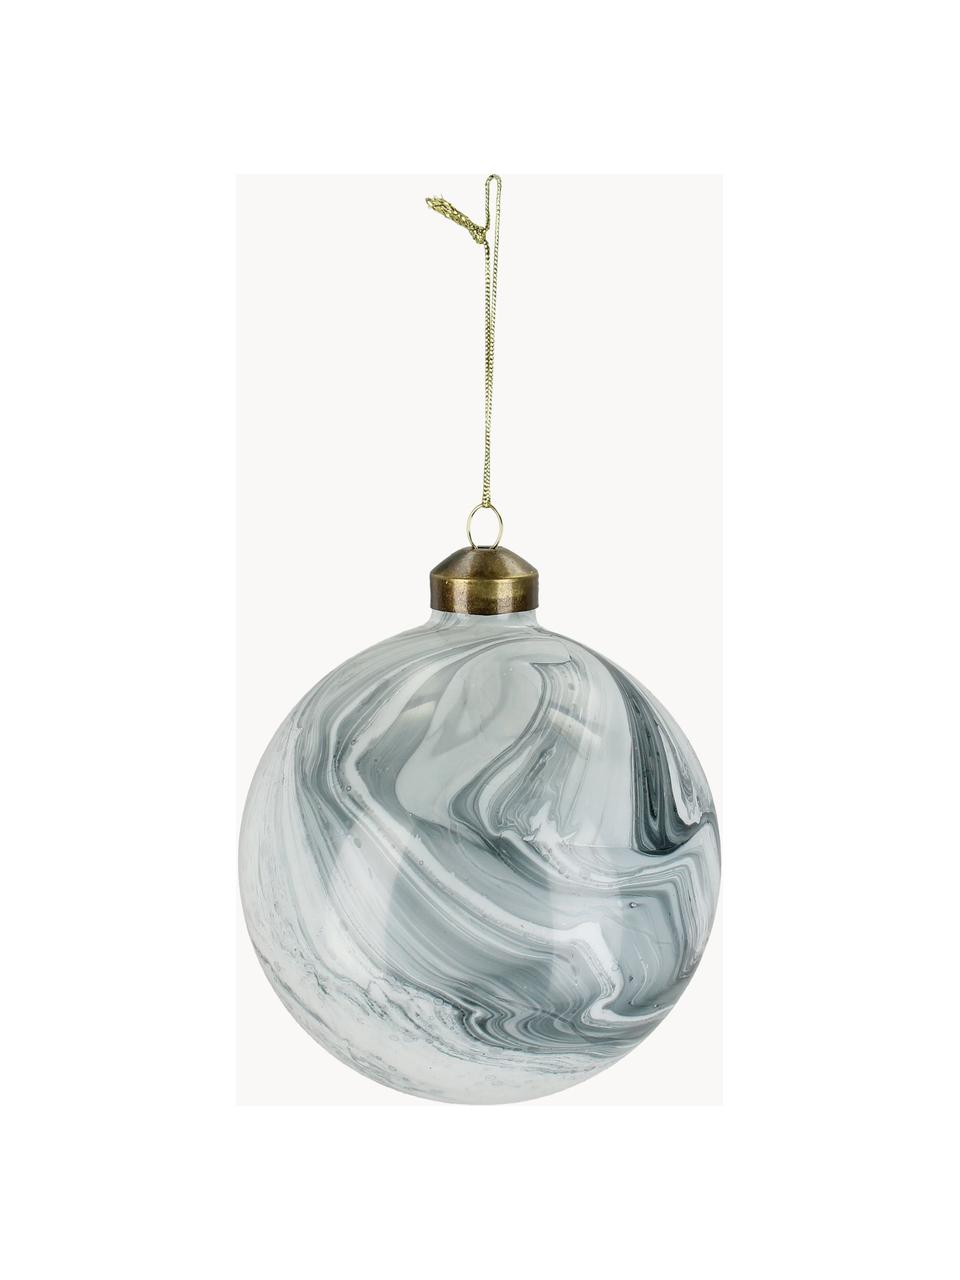 Vánoční ozdoby v mramorovém vzhledu Marble, 6 ks, Sklo, Bílá, šedá, mramorový vzhled, Ø 10 cm